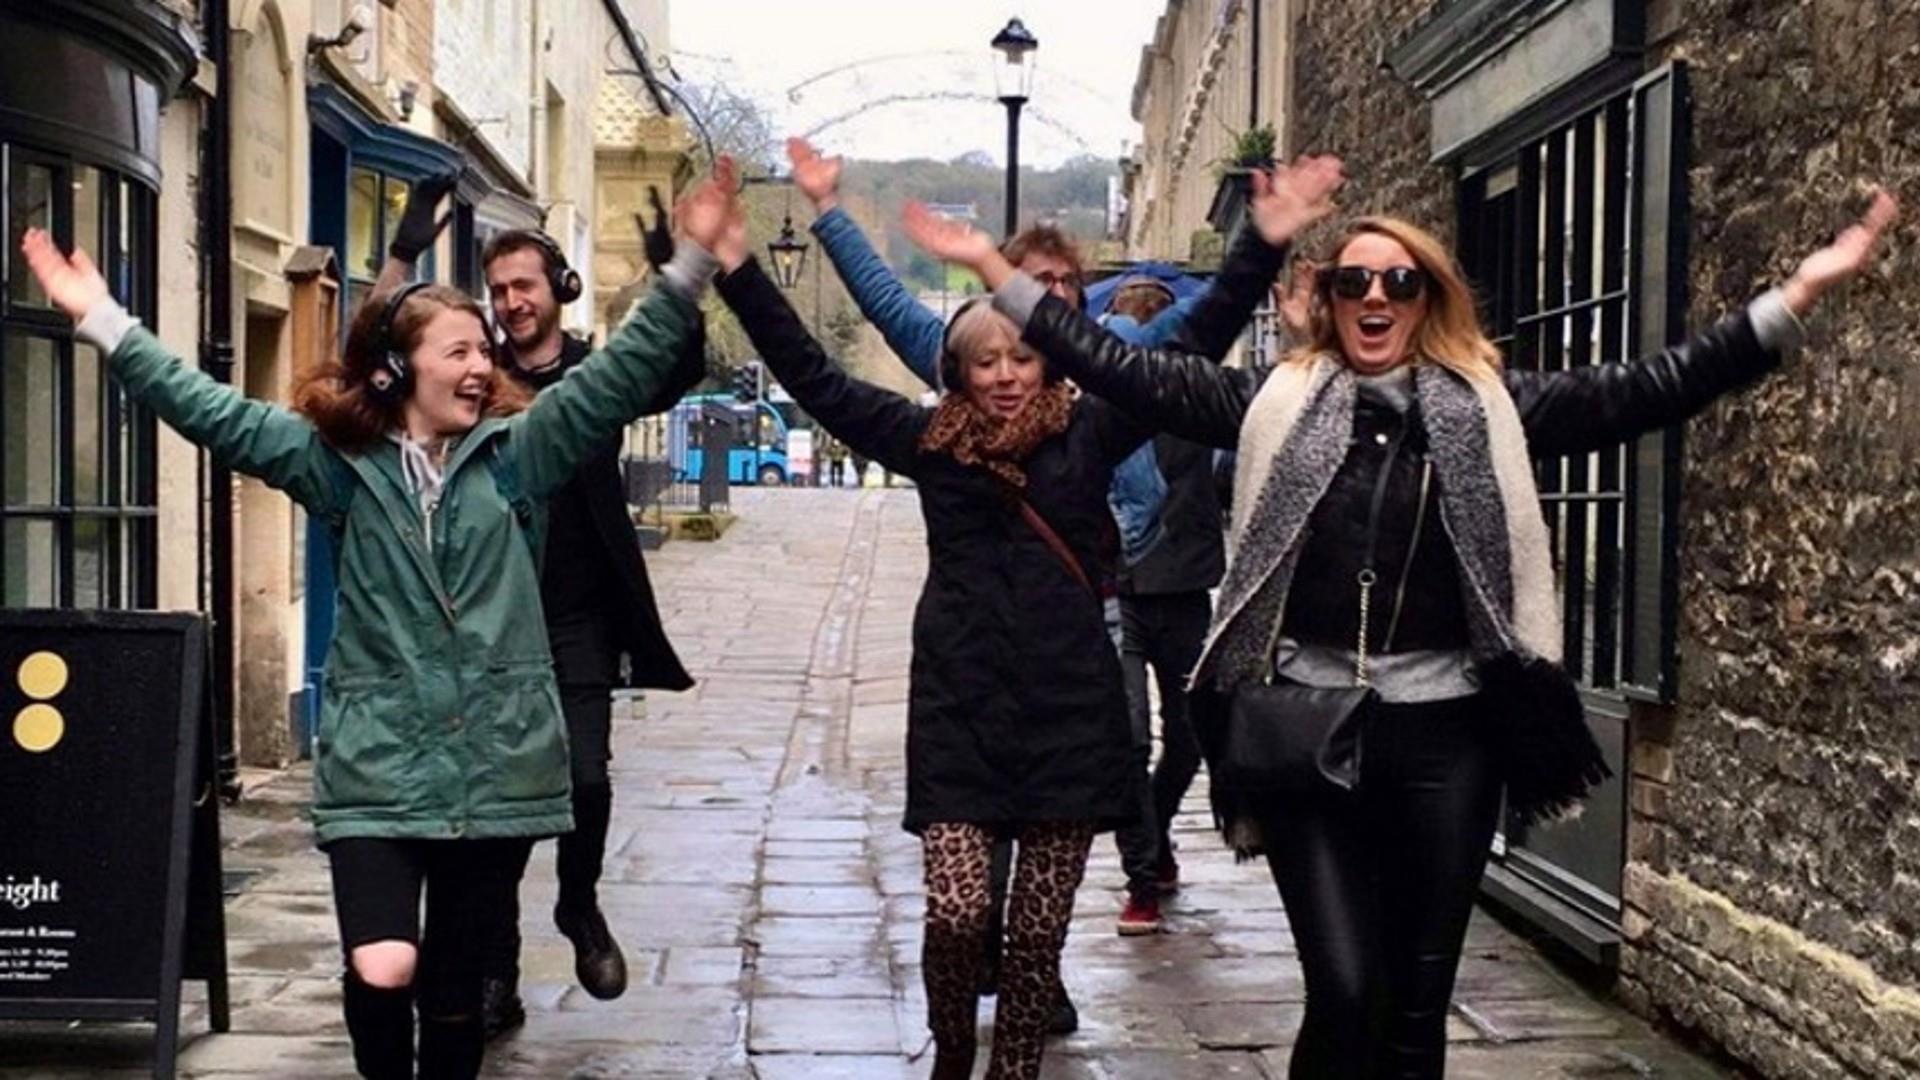 Group take tour around Bath wearing headphones